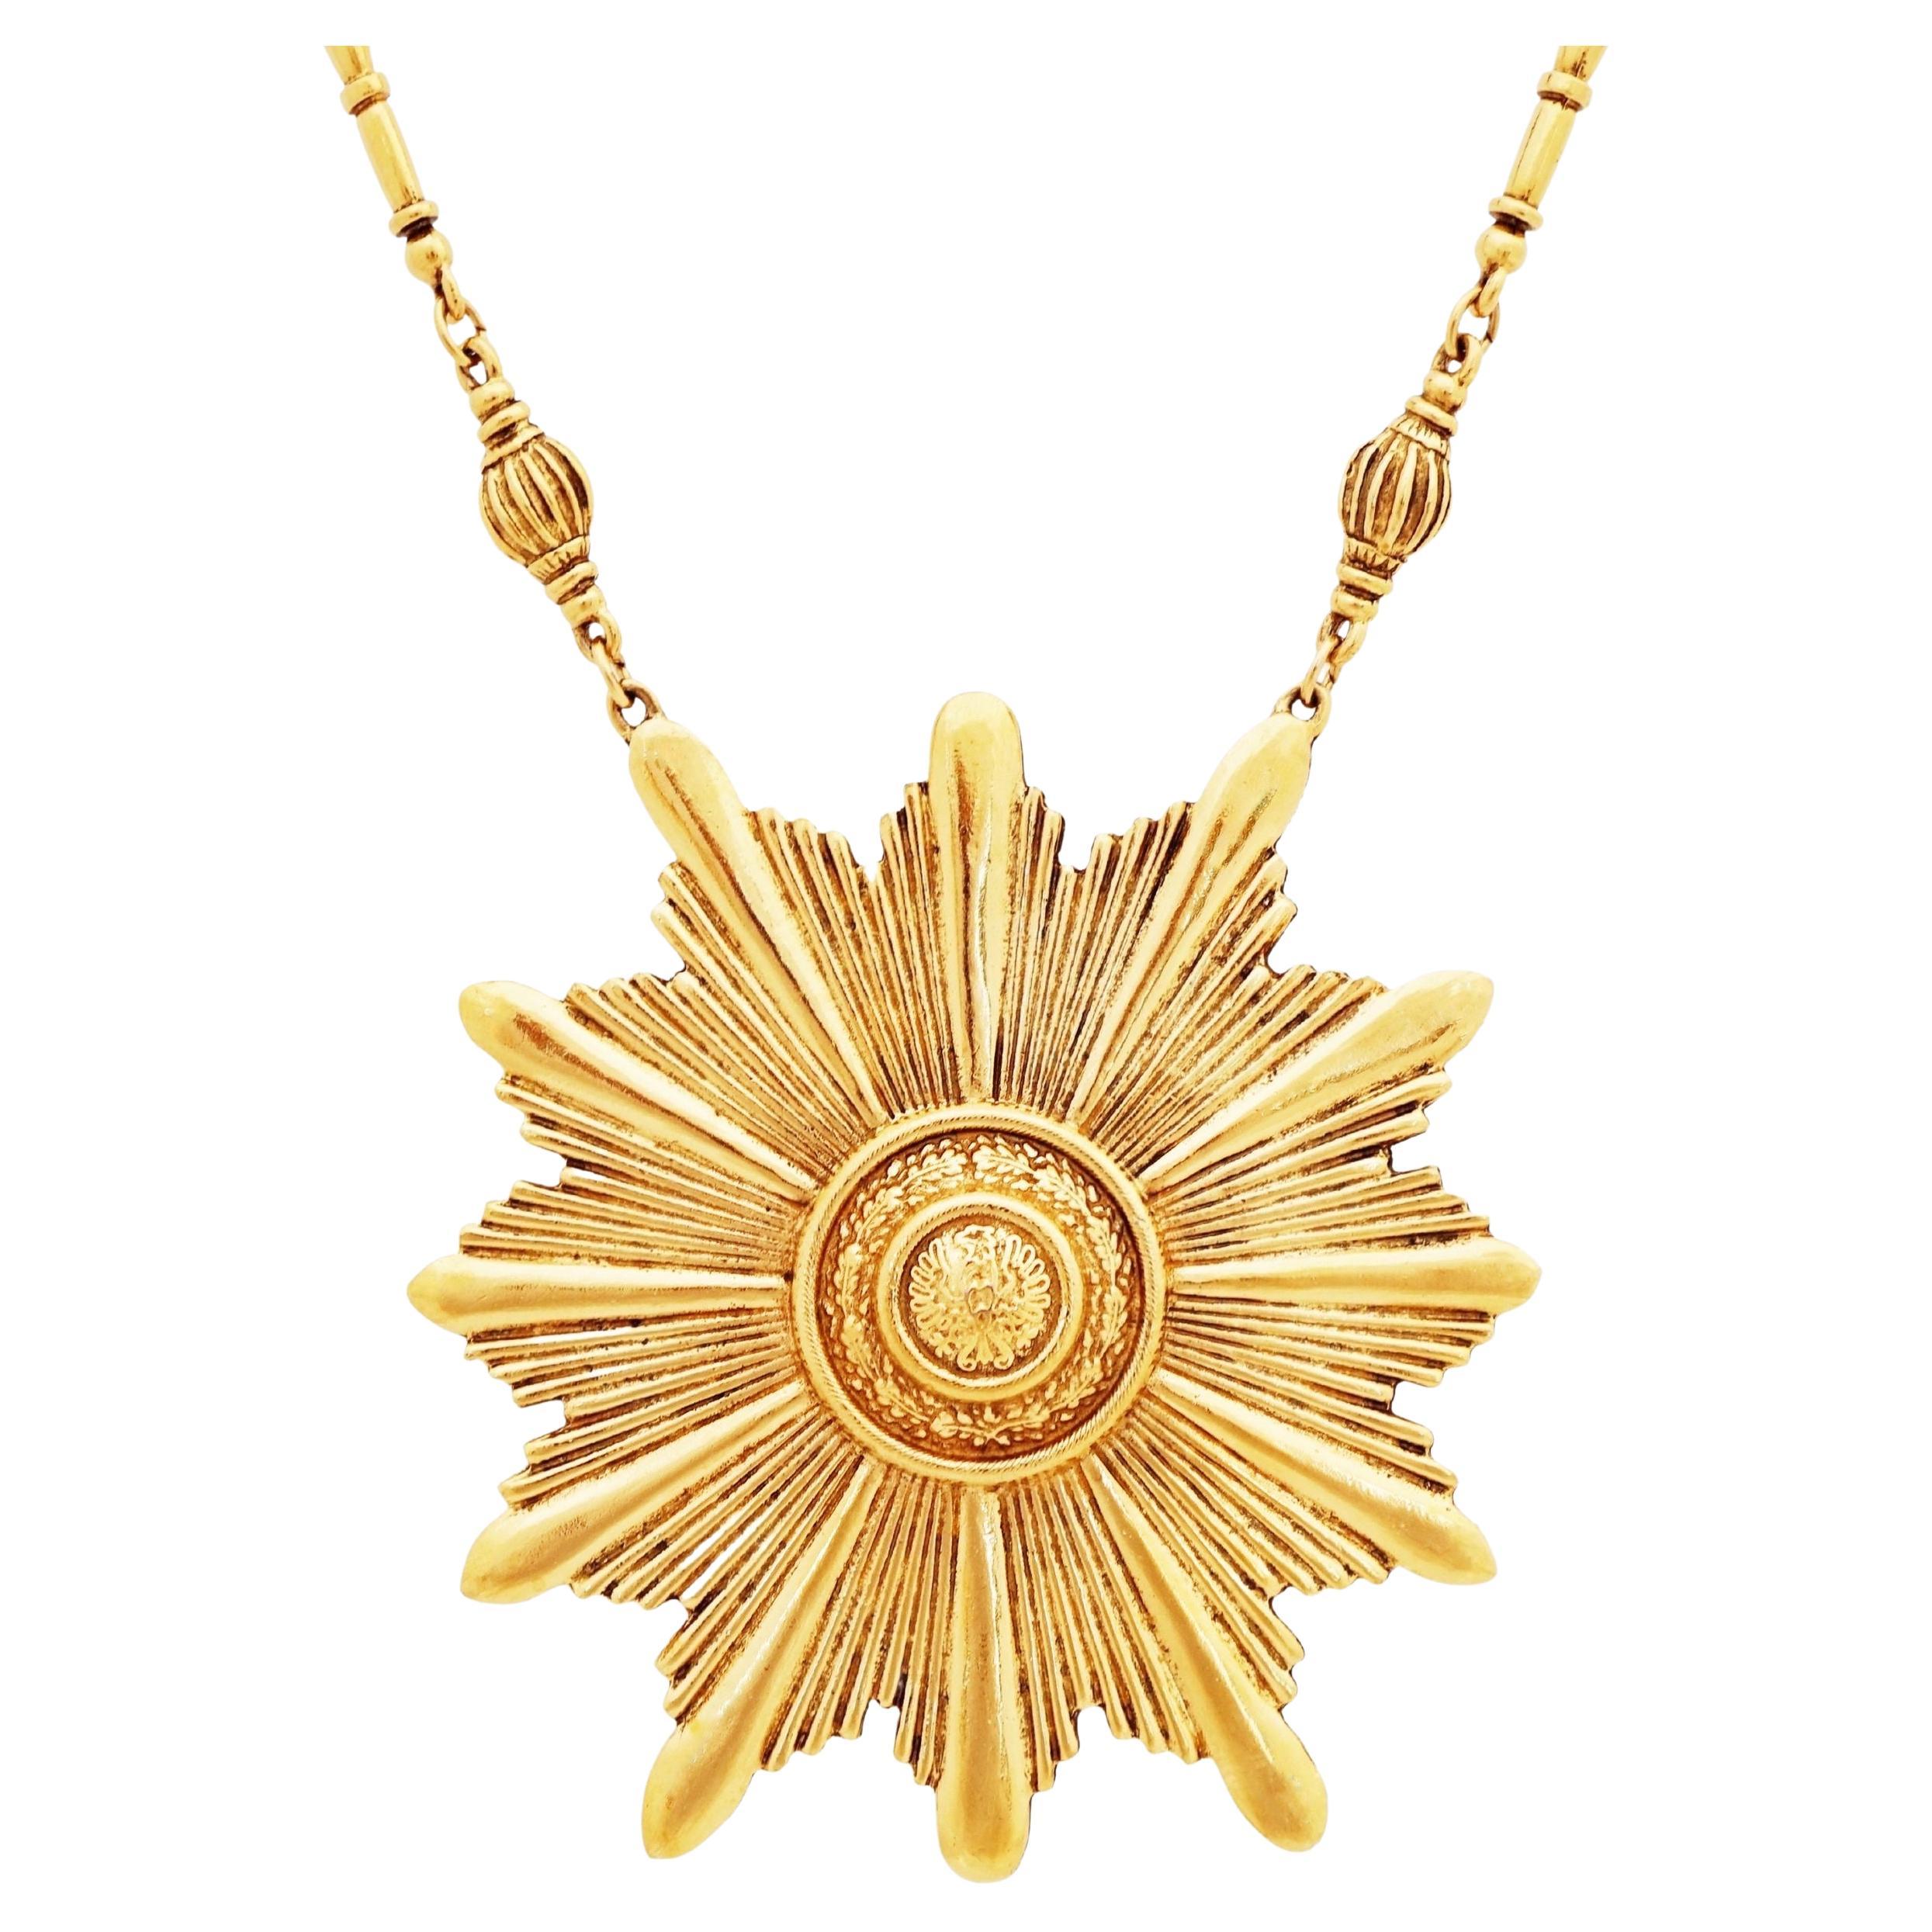 Massive Runway Gold Sunburst Pendant Necklace By Accessocraft, 1960s